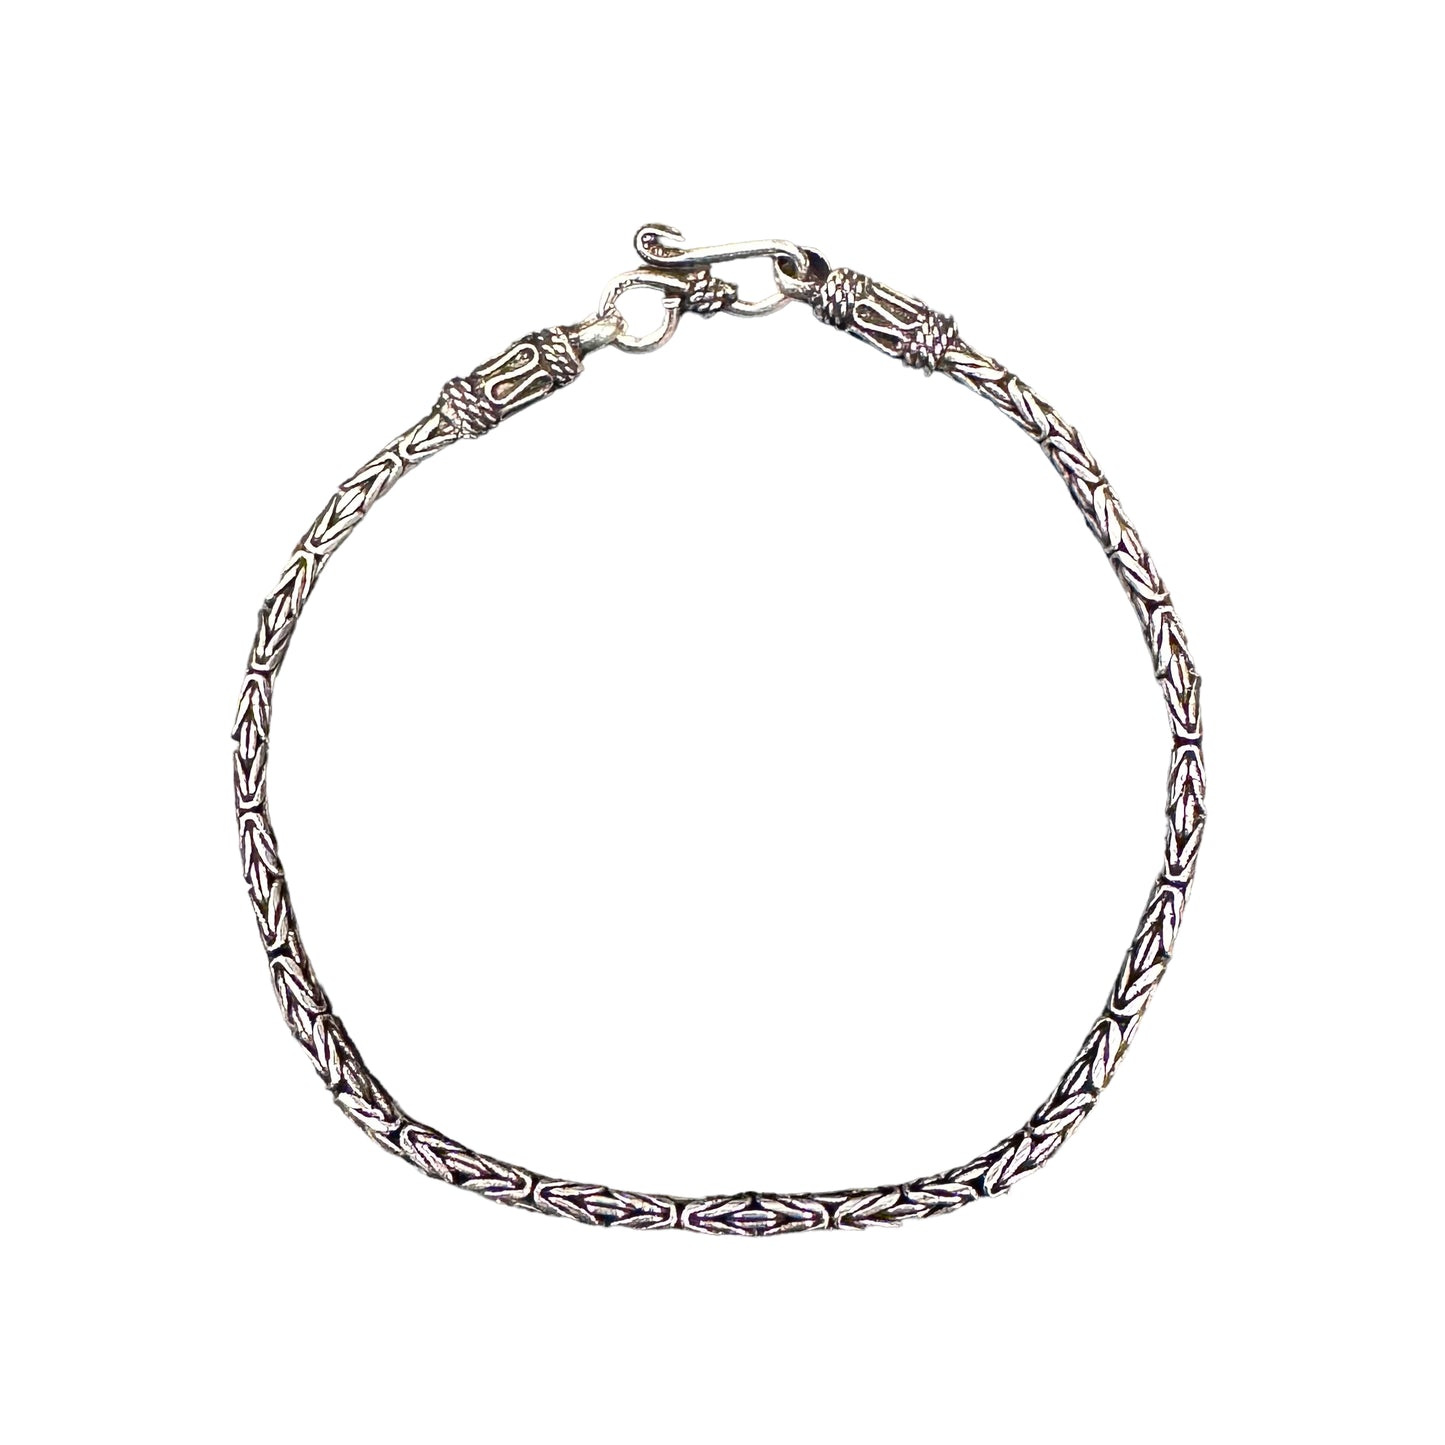 Bali Byzantine 2.5mm Sterling Silver Bracelet Chain